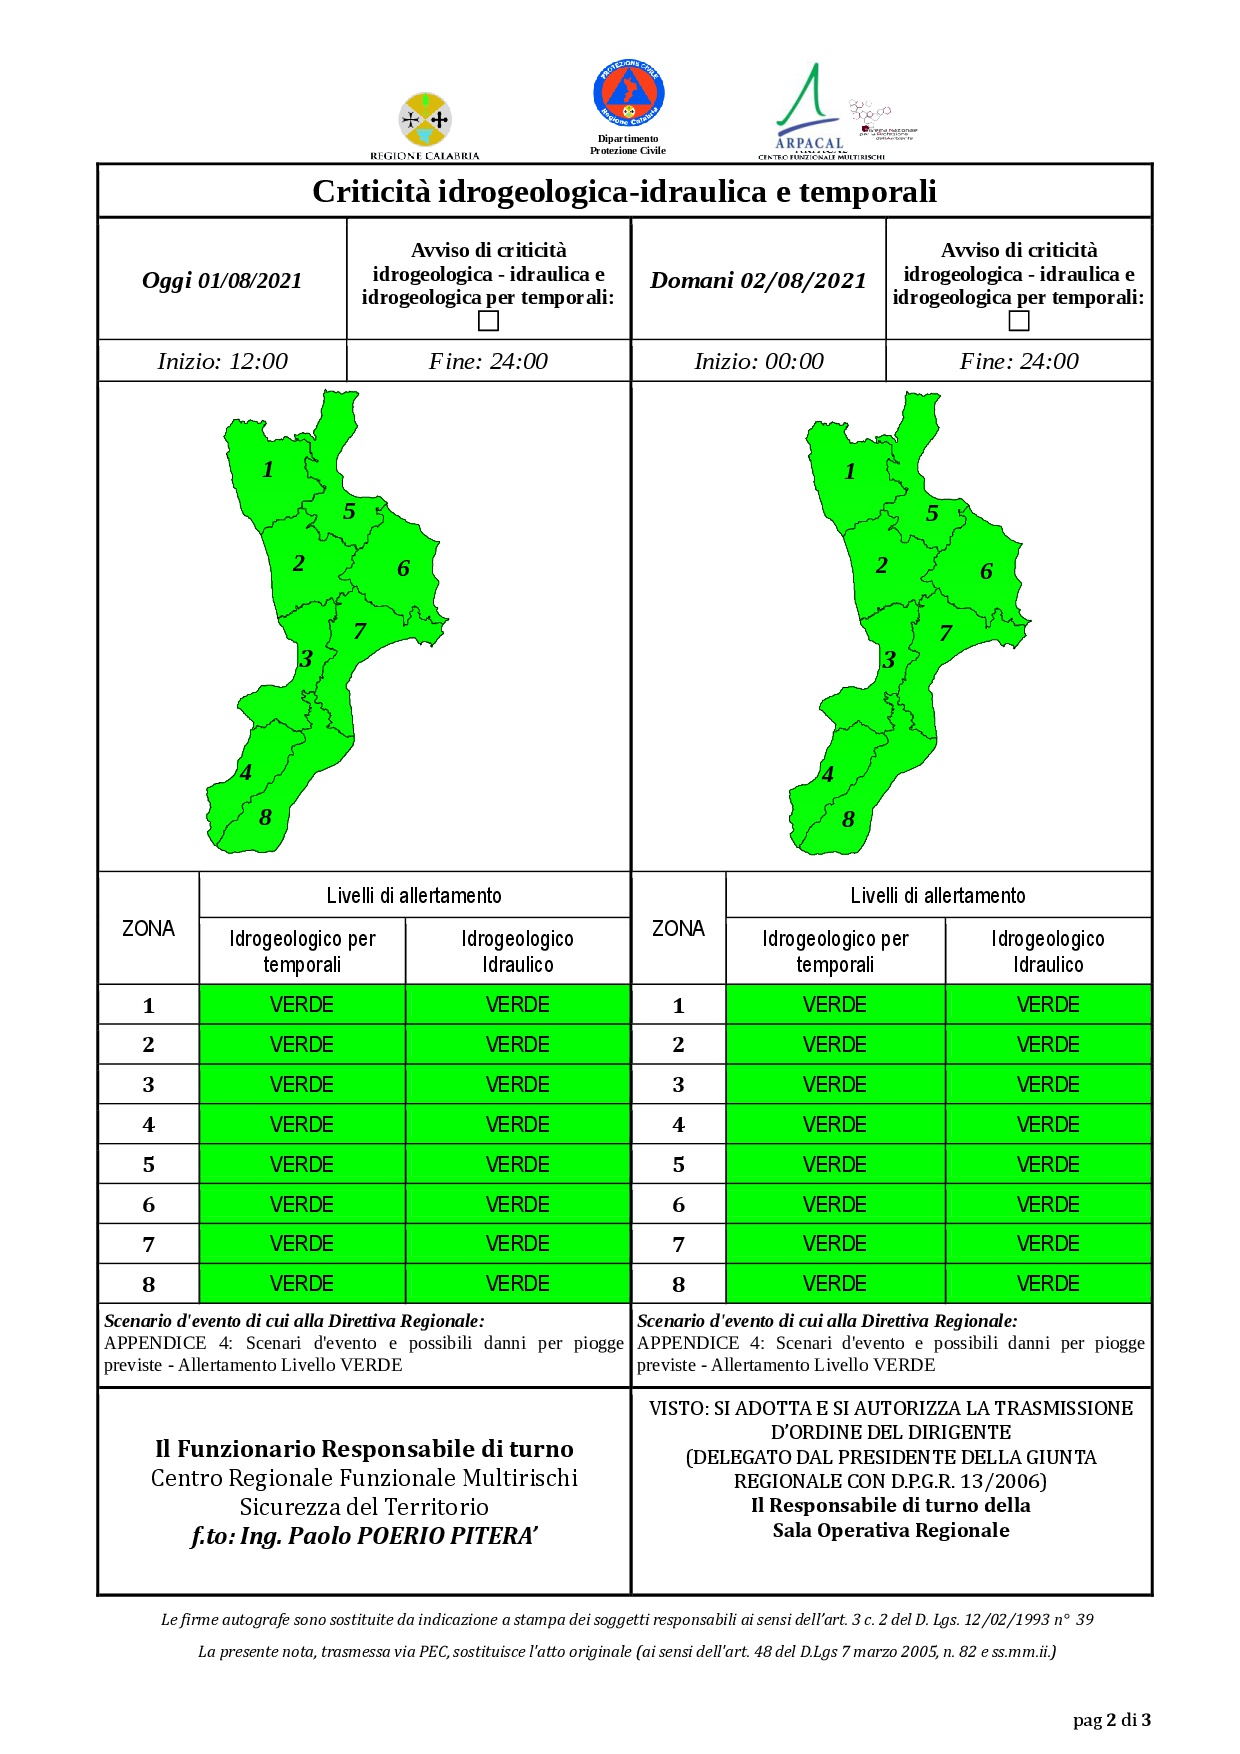 Criticità idrogeologica-idraulica e temporali in Calabria 01-08-2021